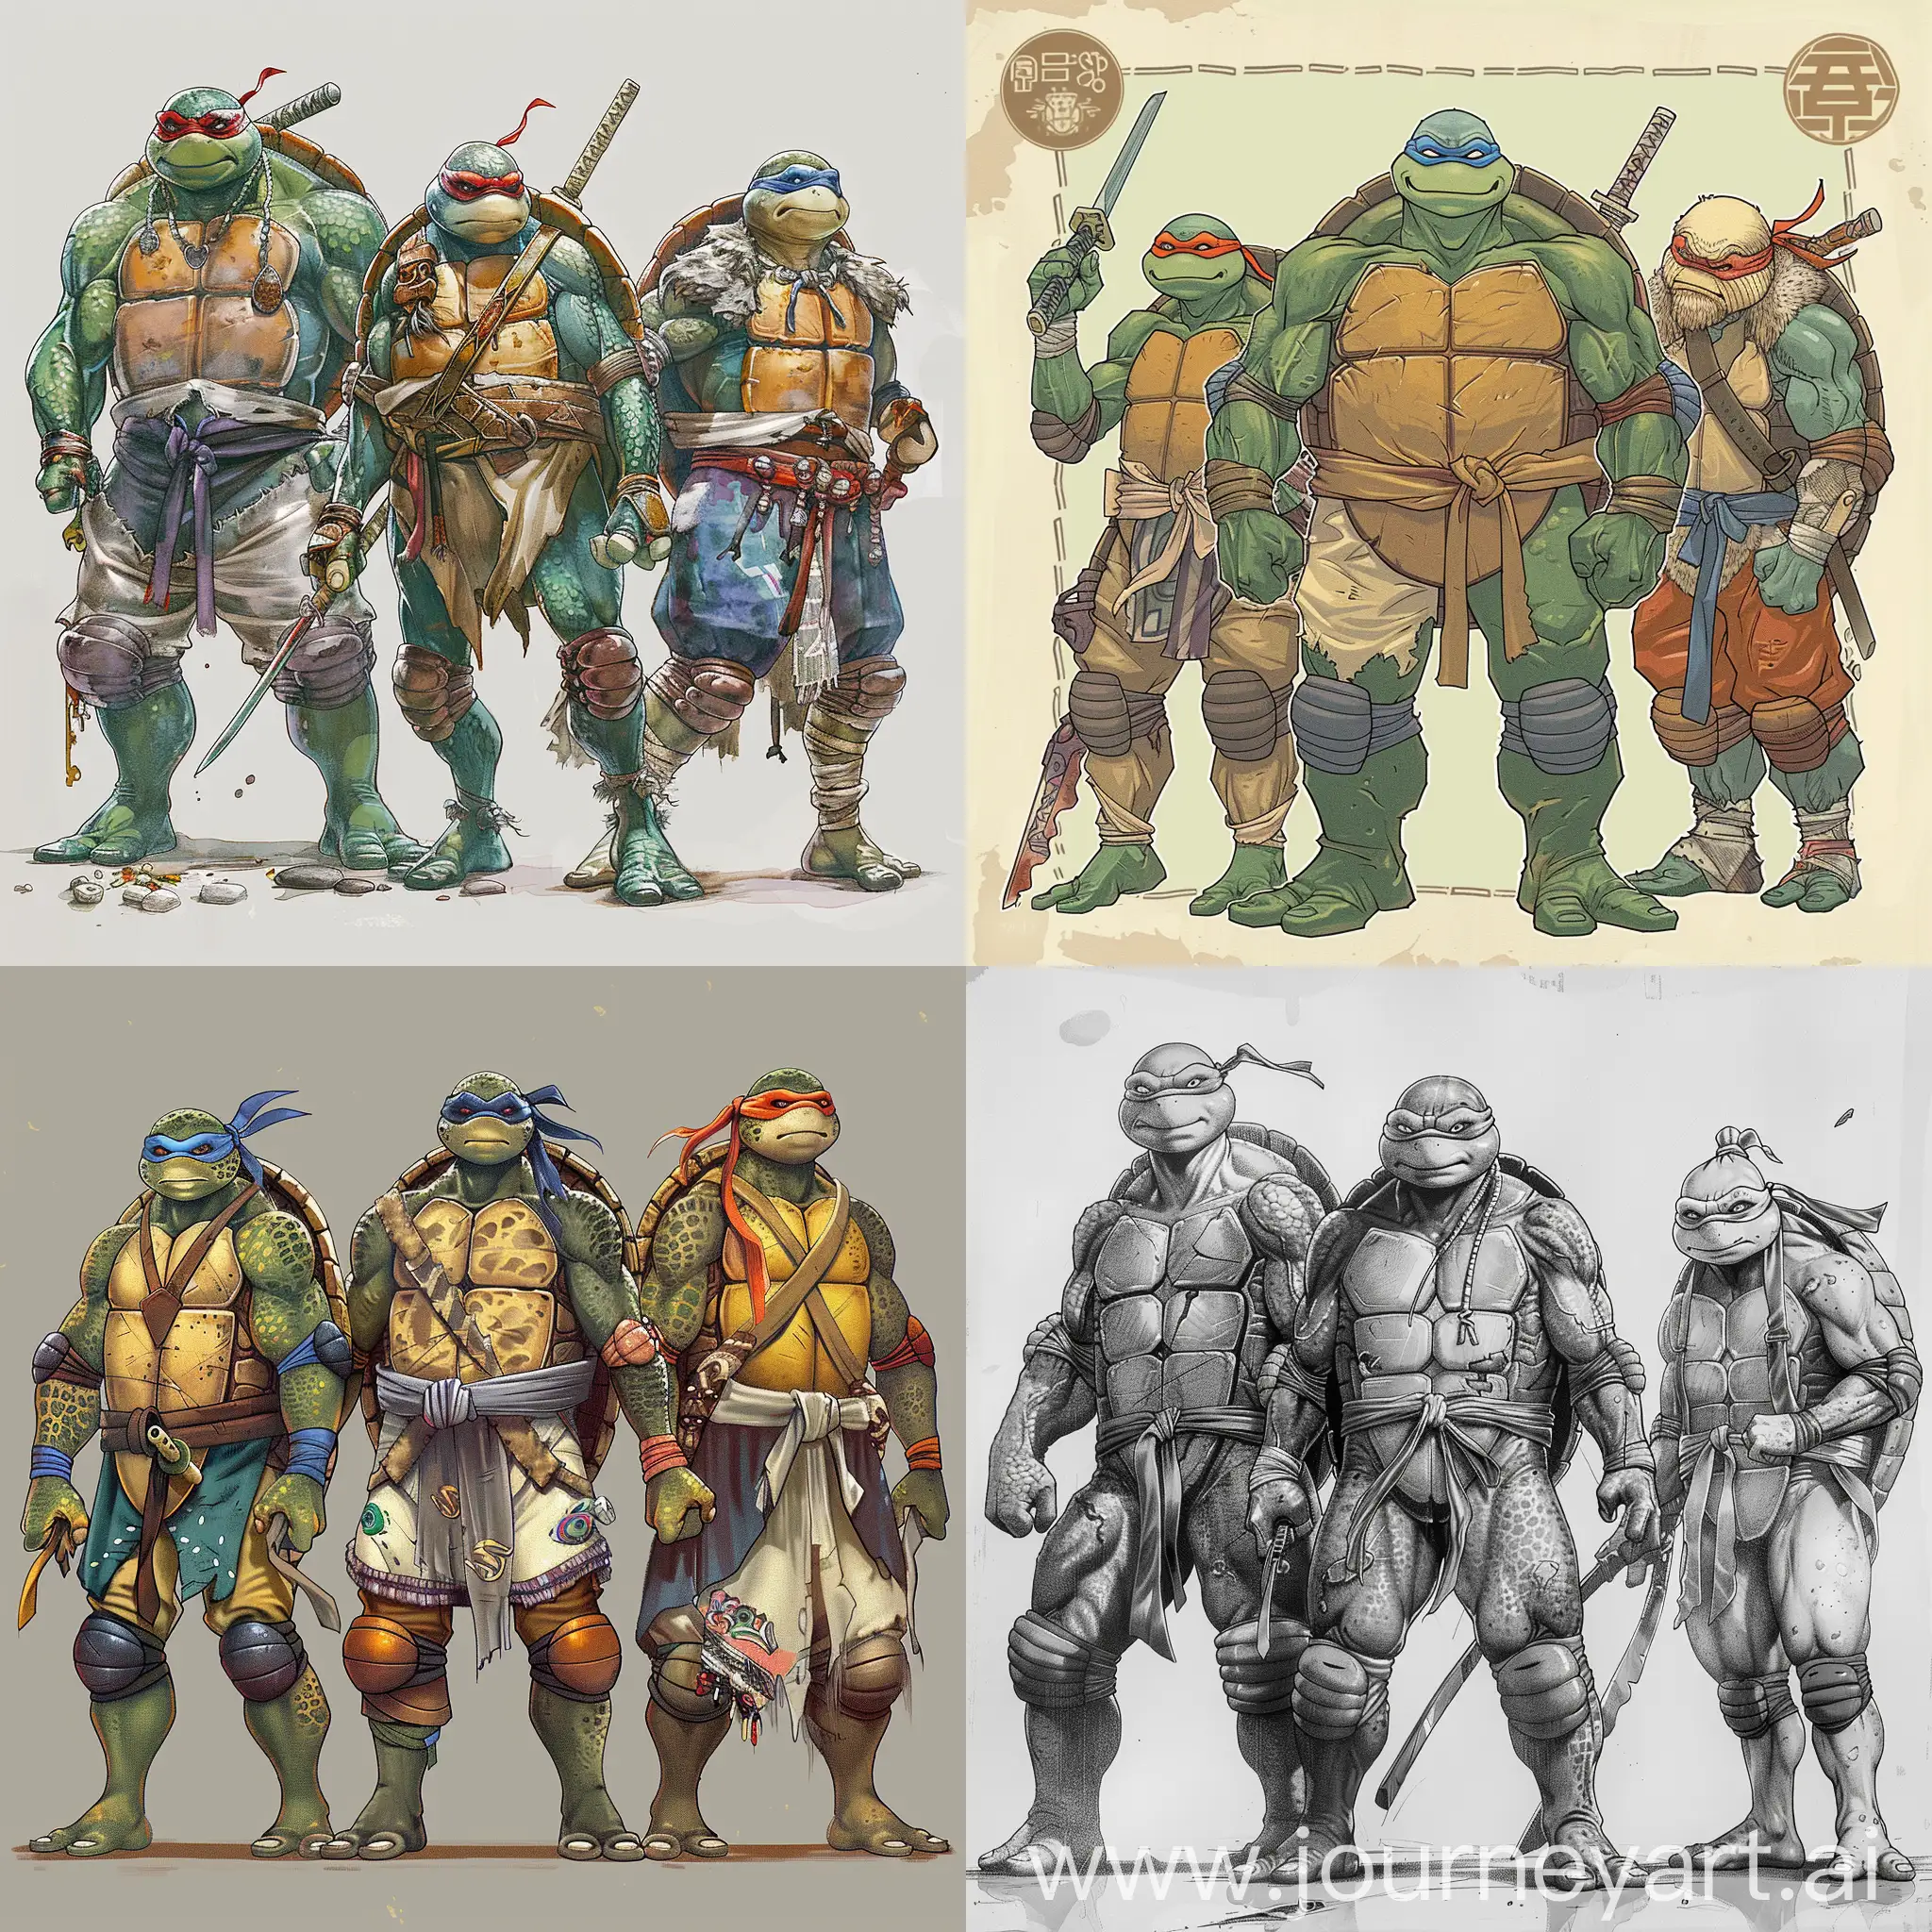 Diverse-Ninja-Turtles-Unite-in-Powerful-Action